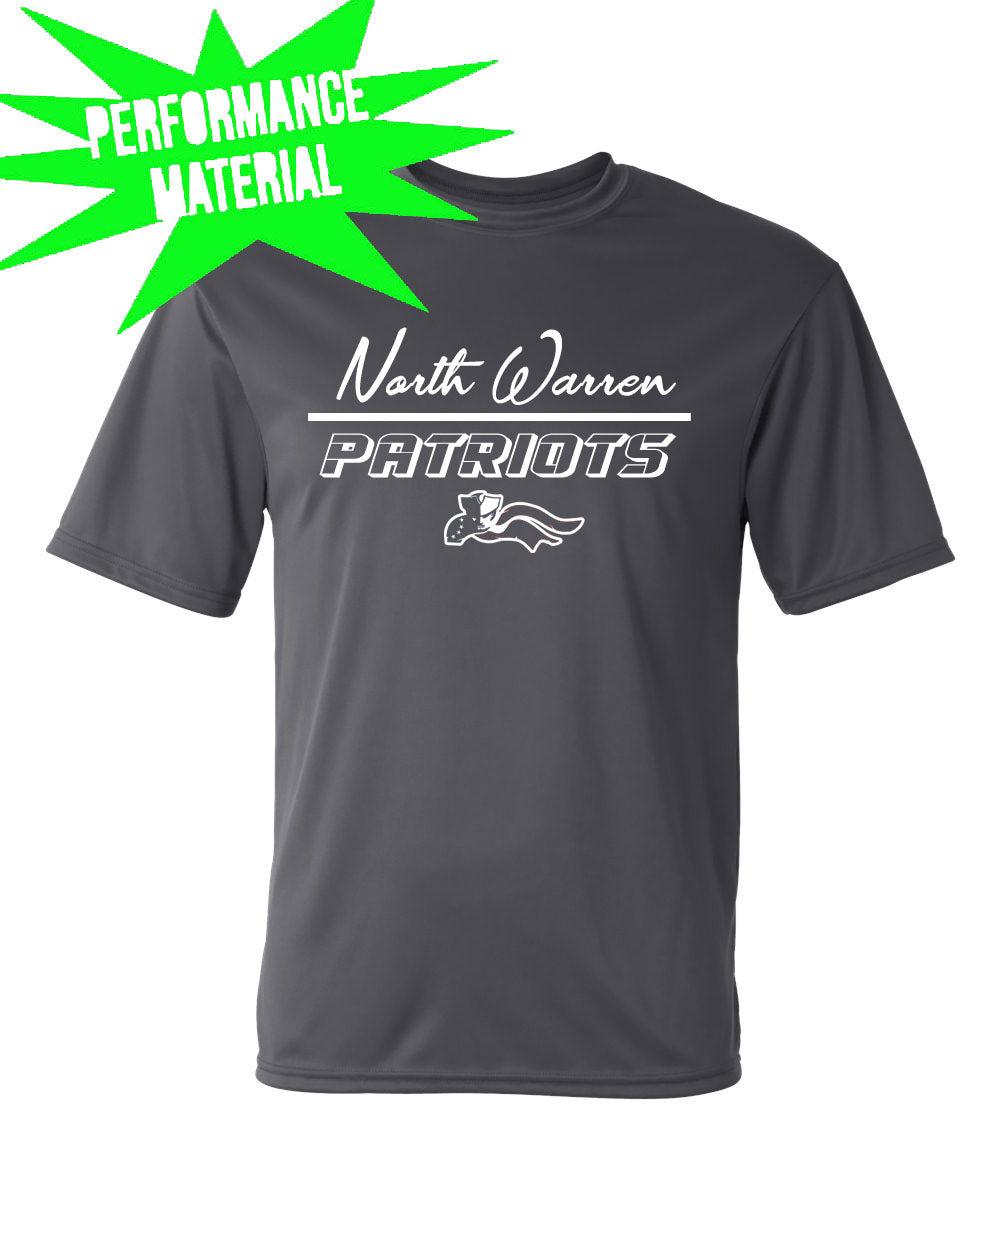 North Warren Performance Material design 10 T-Shirt